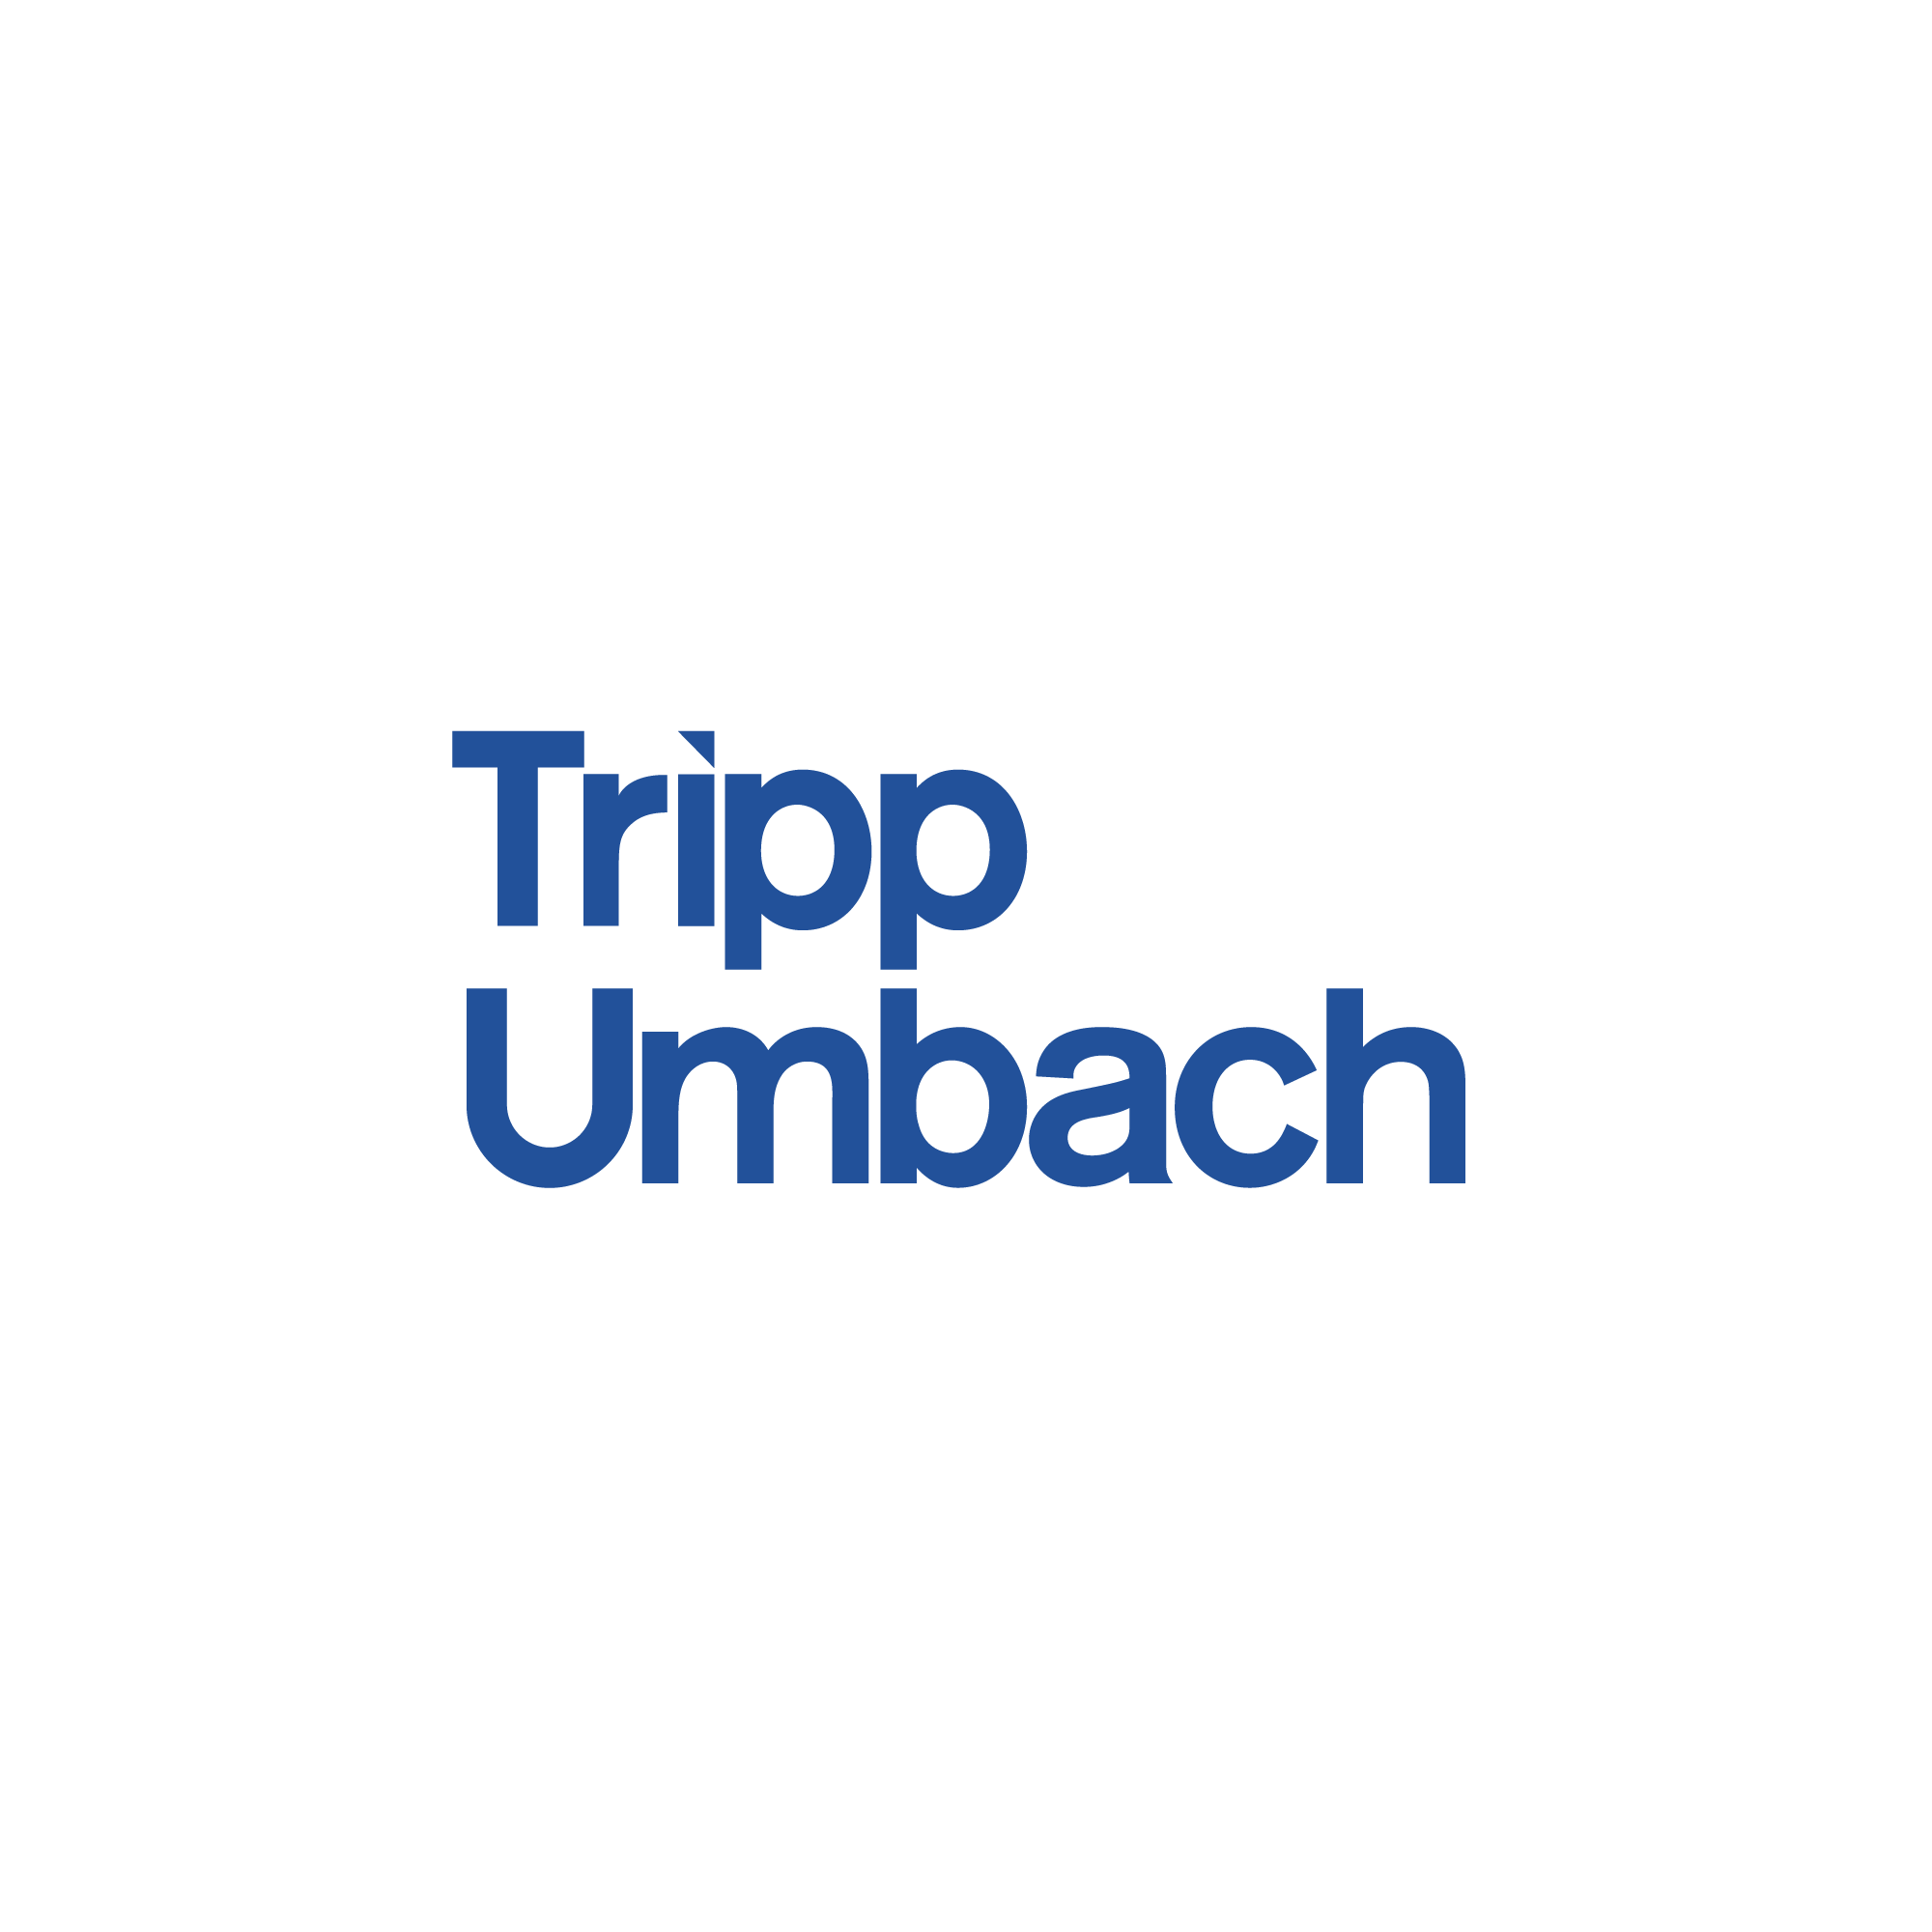 trippumbach.png